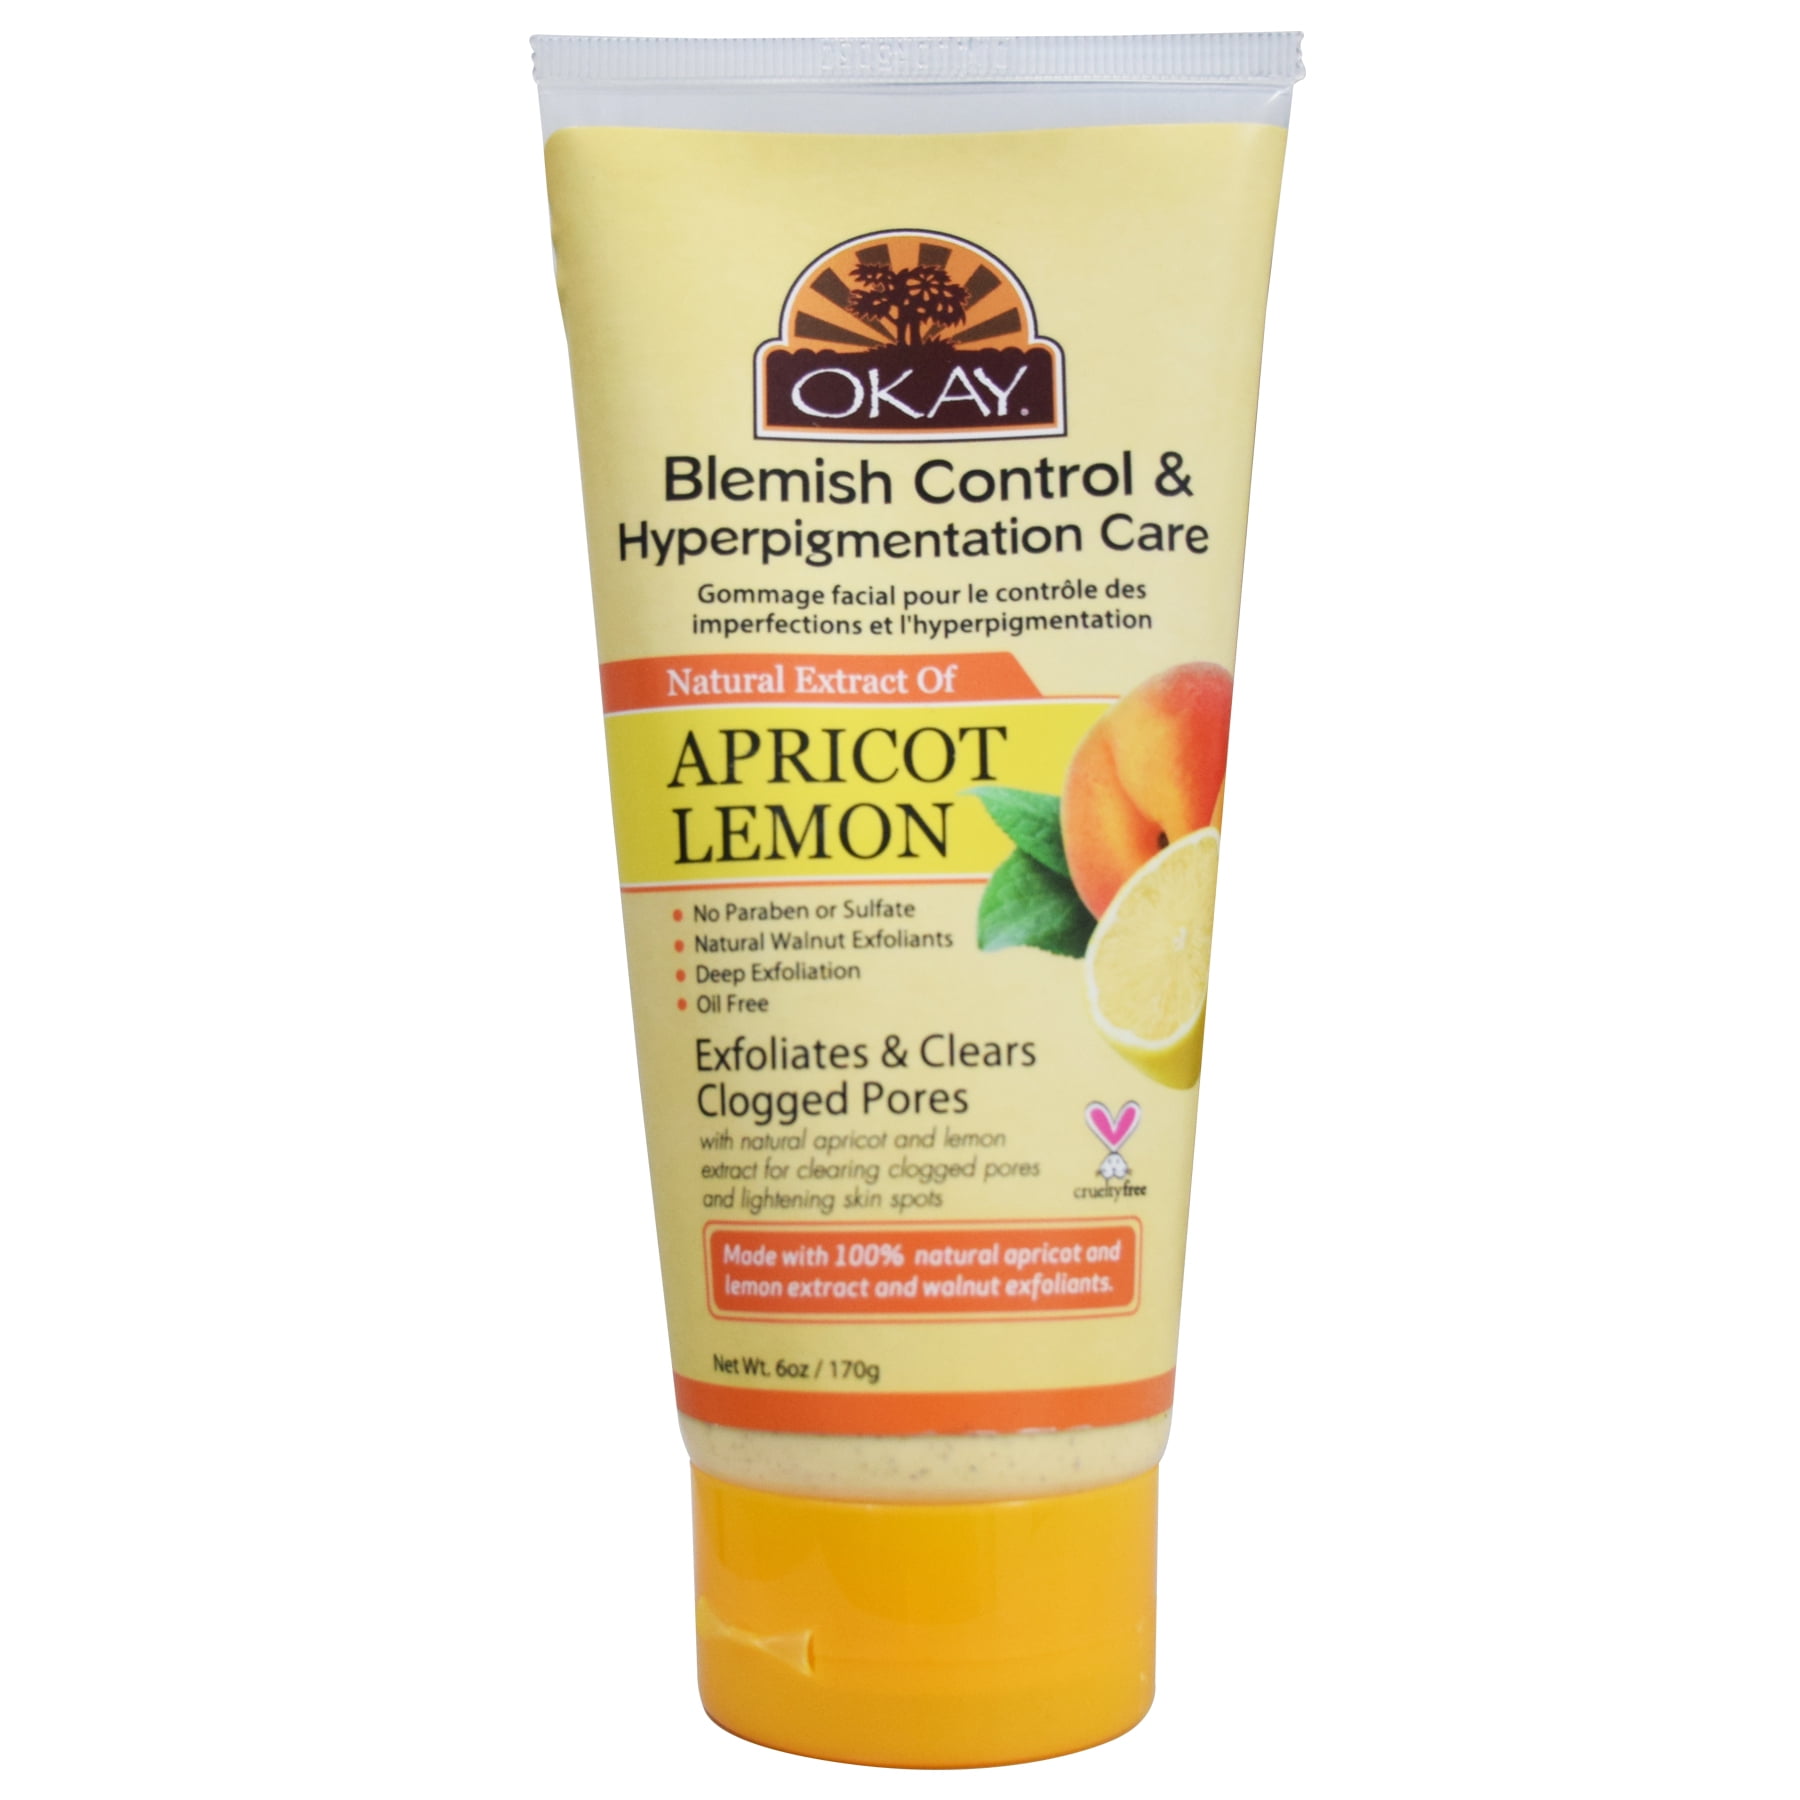 OKAY Blemish Control & Hyperpigmentation Care Apricot Lemon Facial Scrub, 6 oz